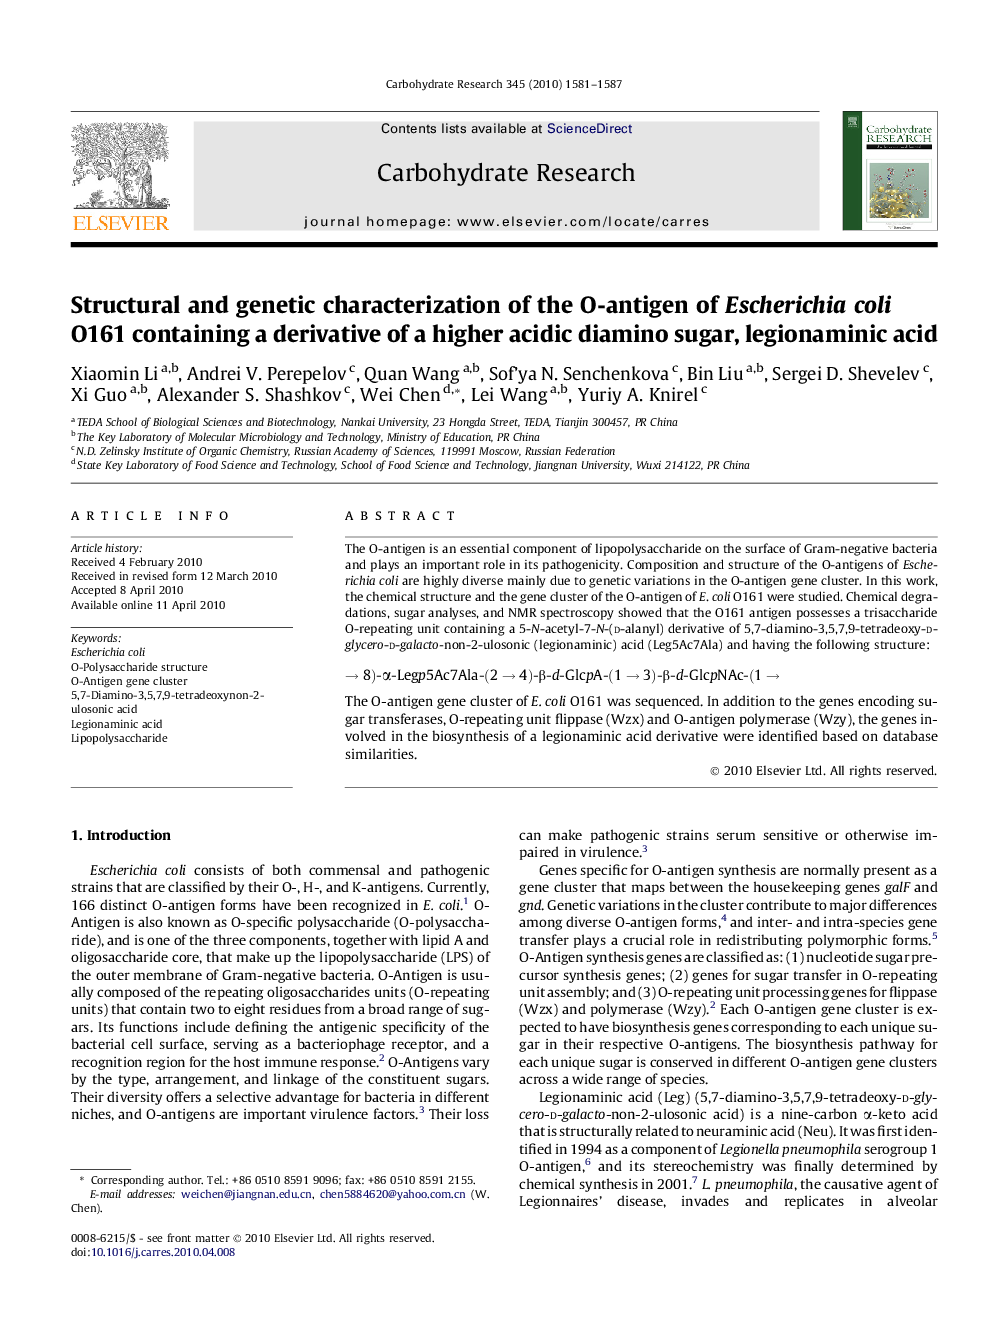 Structural and genetic characterization of the O-antigen of Escherichia coli O161 containing a derivative of a higher acidic diamino sugar, legionaminic acid